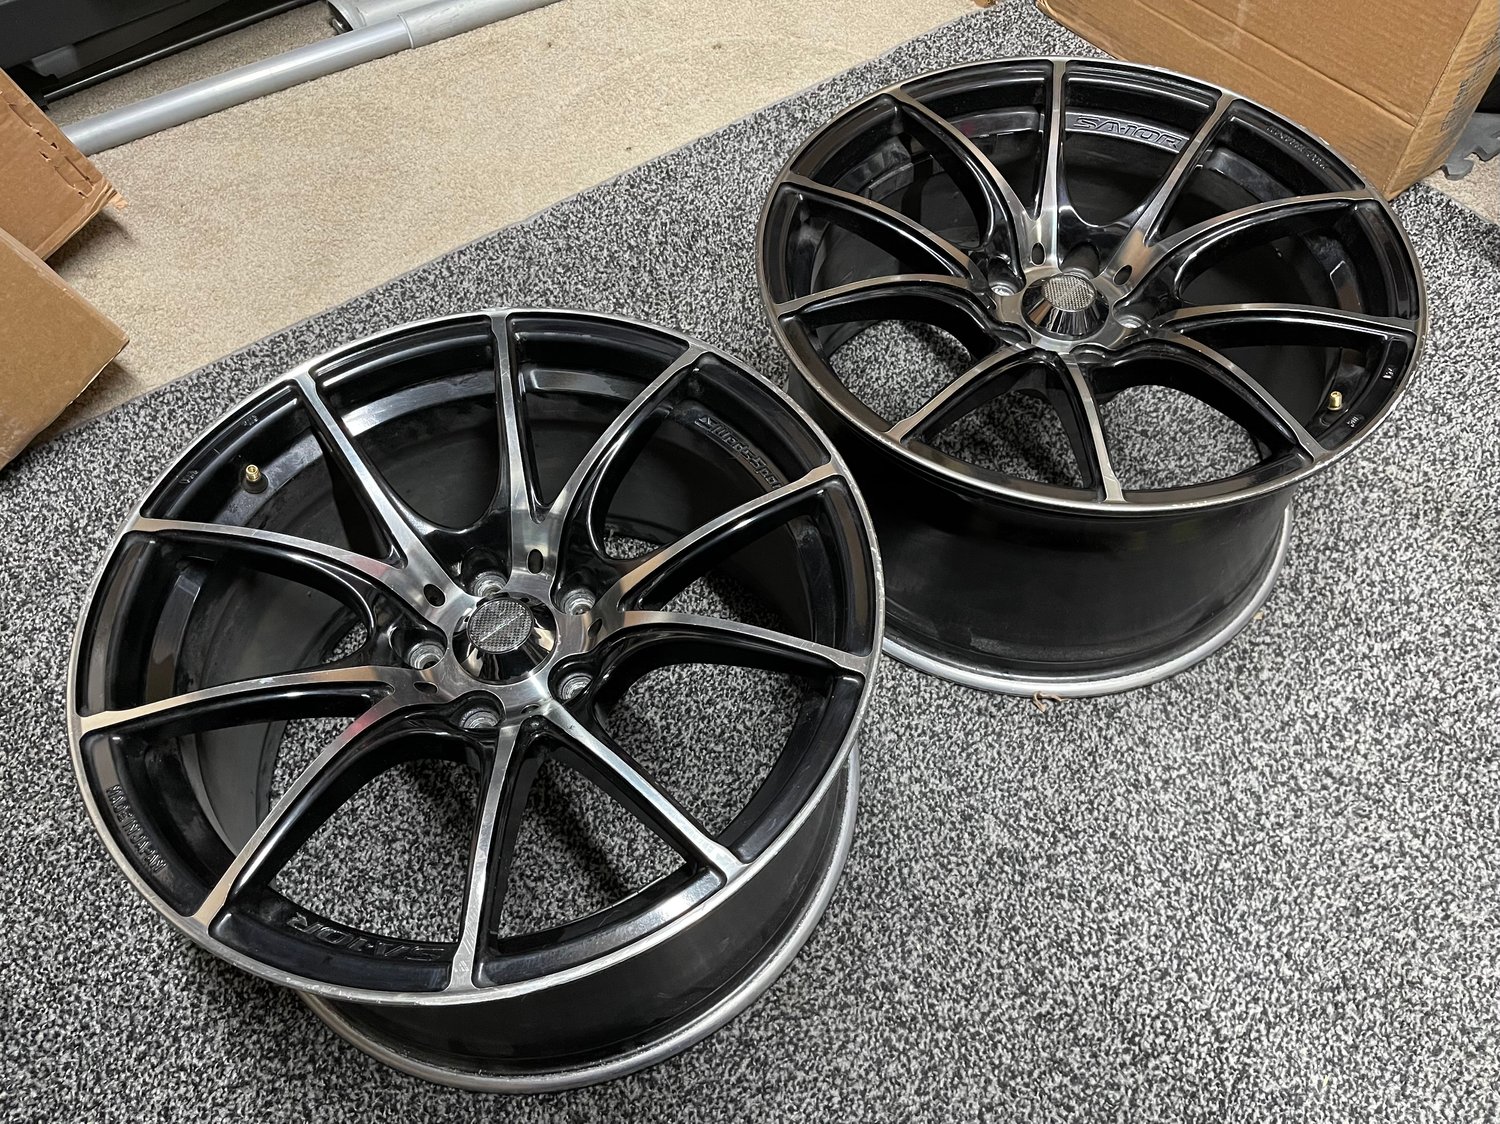 Image of wedsport SA10R JDM Weds wheels 18x9.5” +38 5x114.3 pair